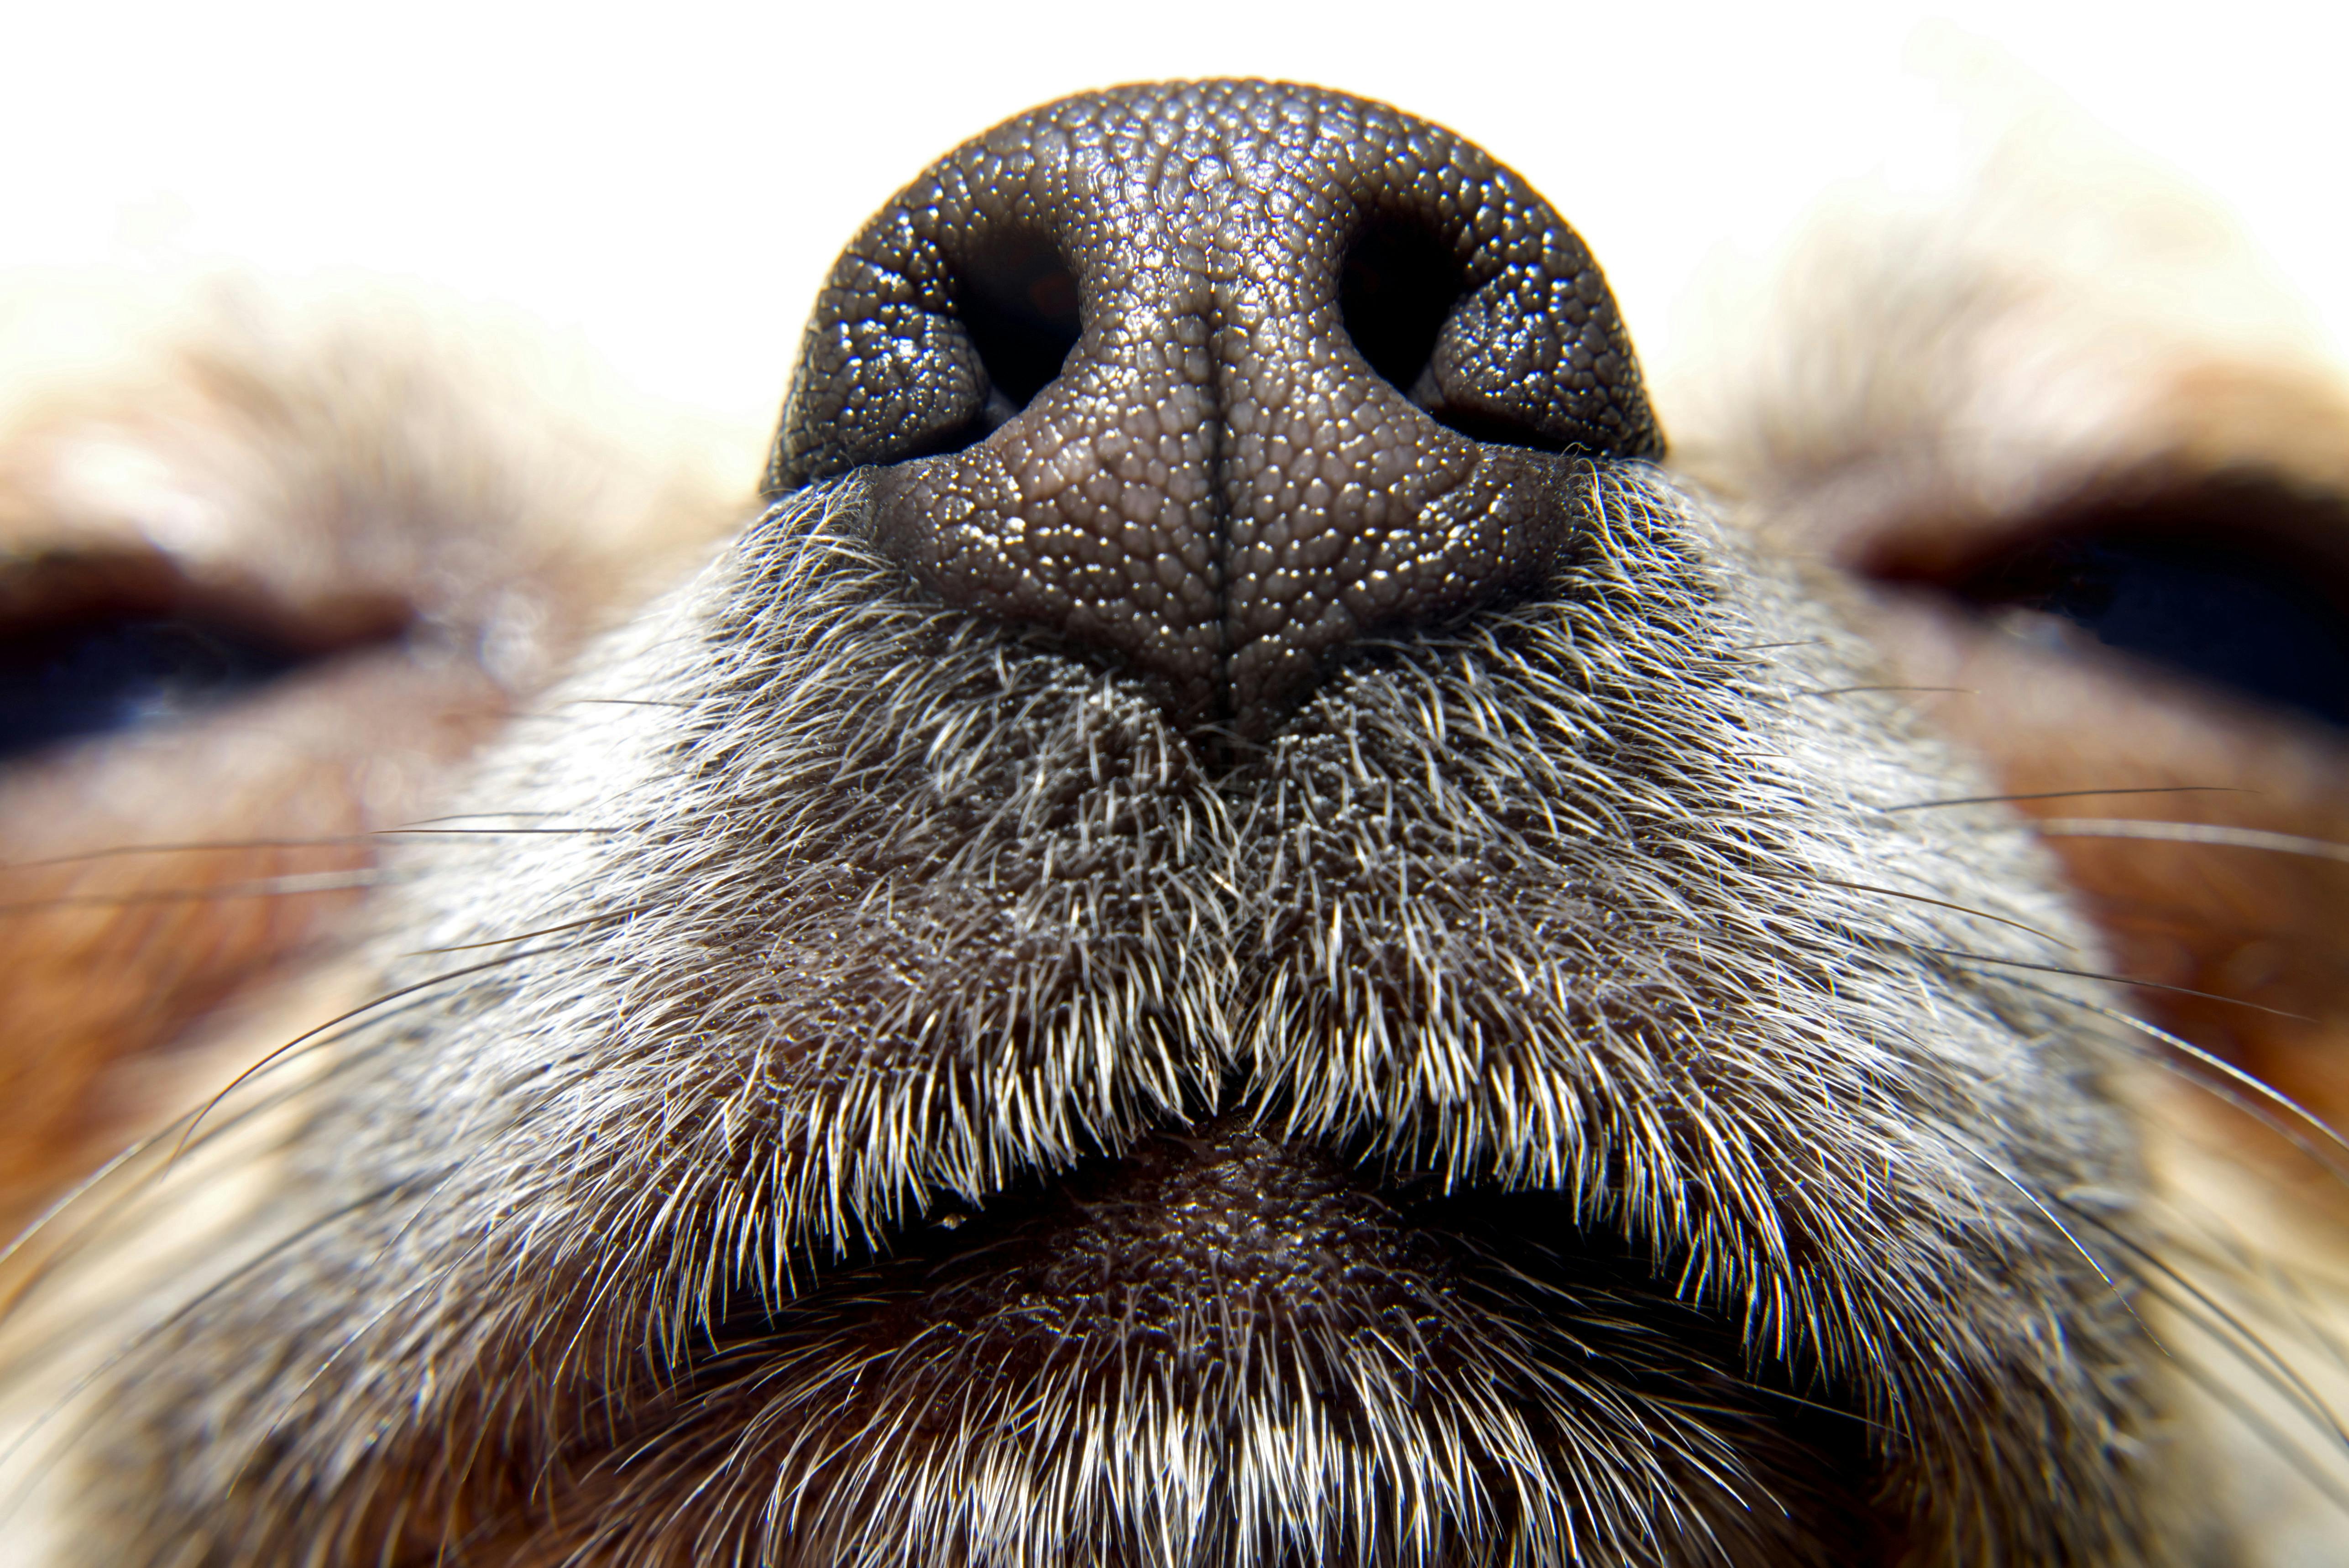 dog nose close up